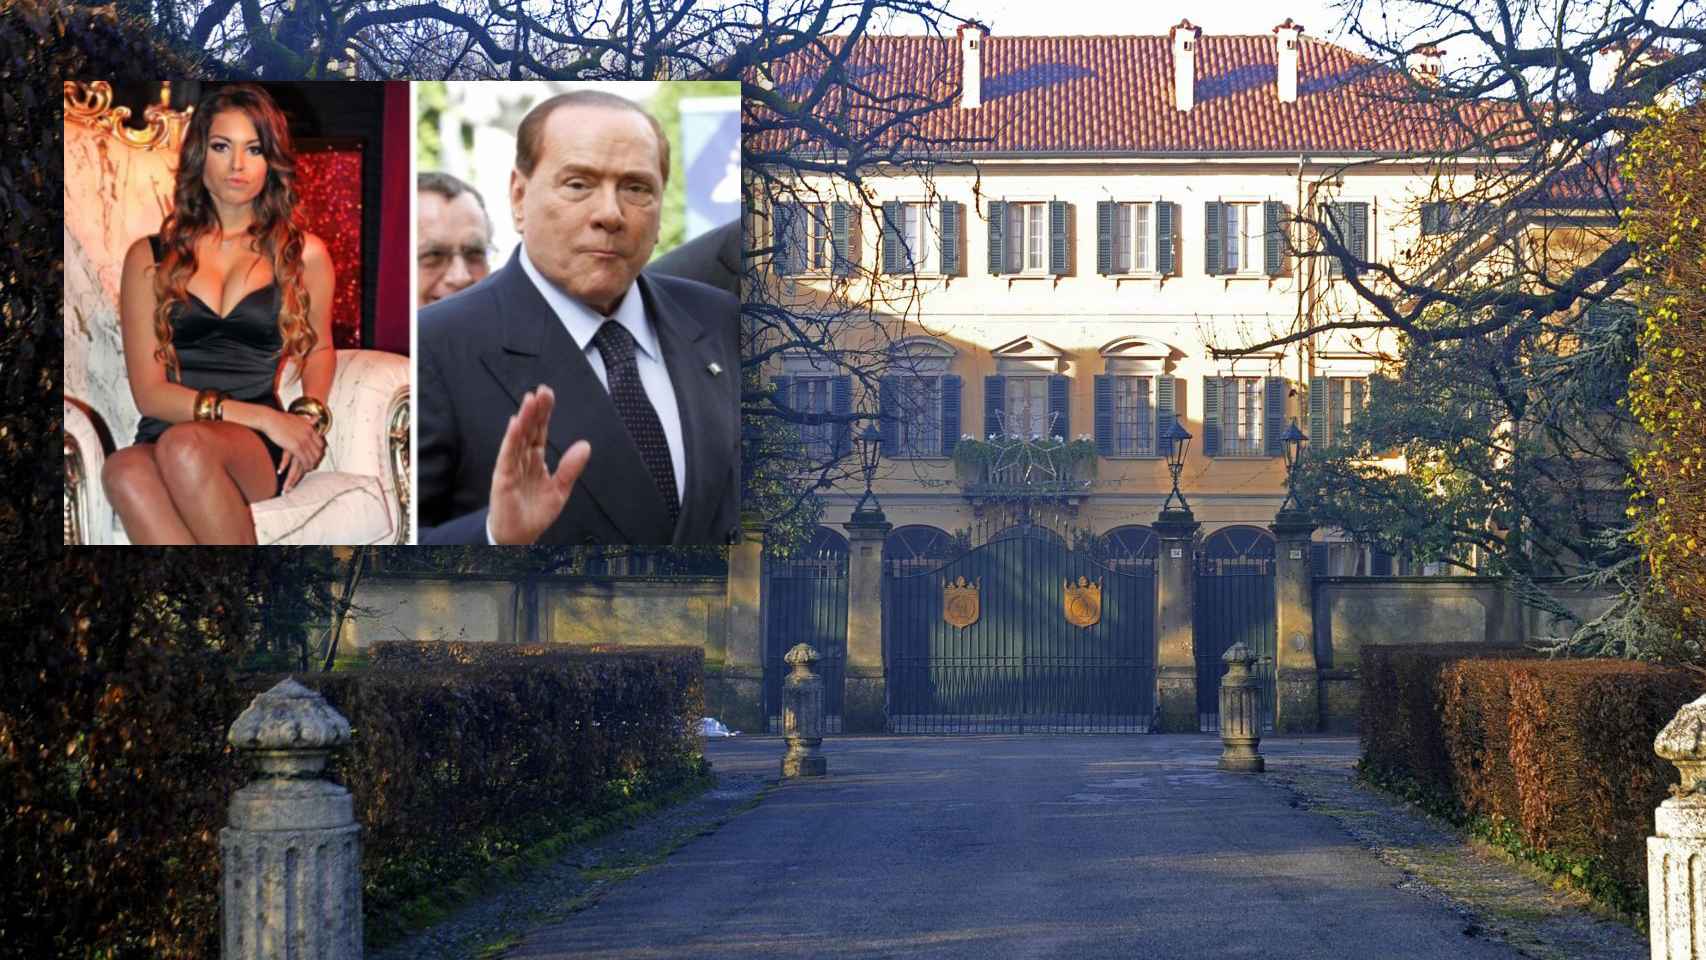  El  bunga  bunga  de Berlusconi un testigo desvela un 